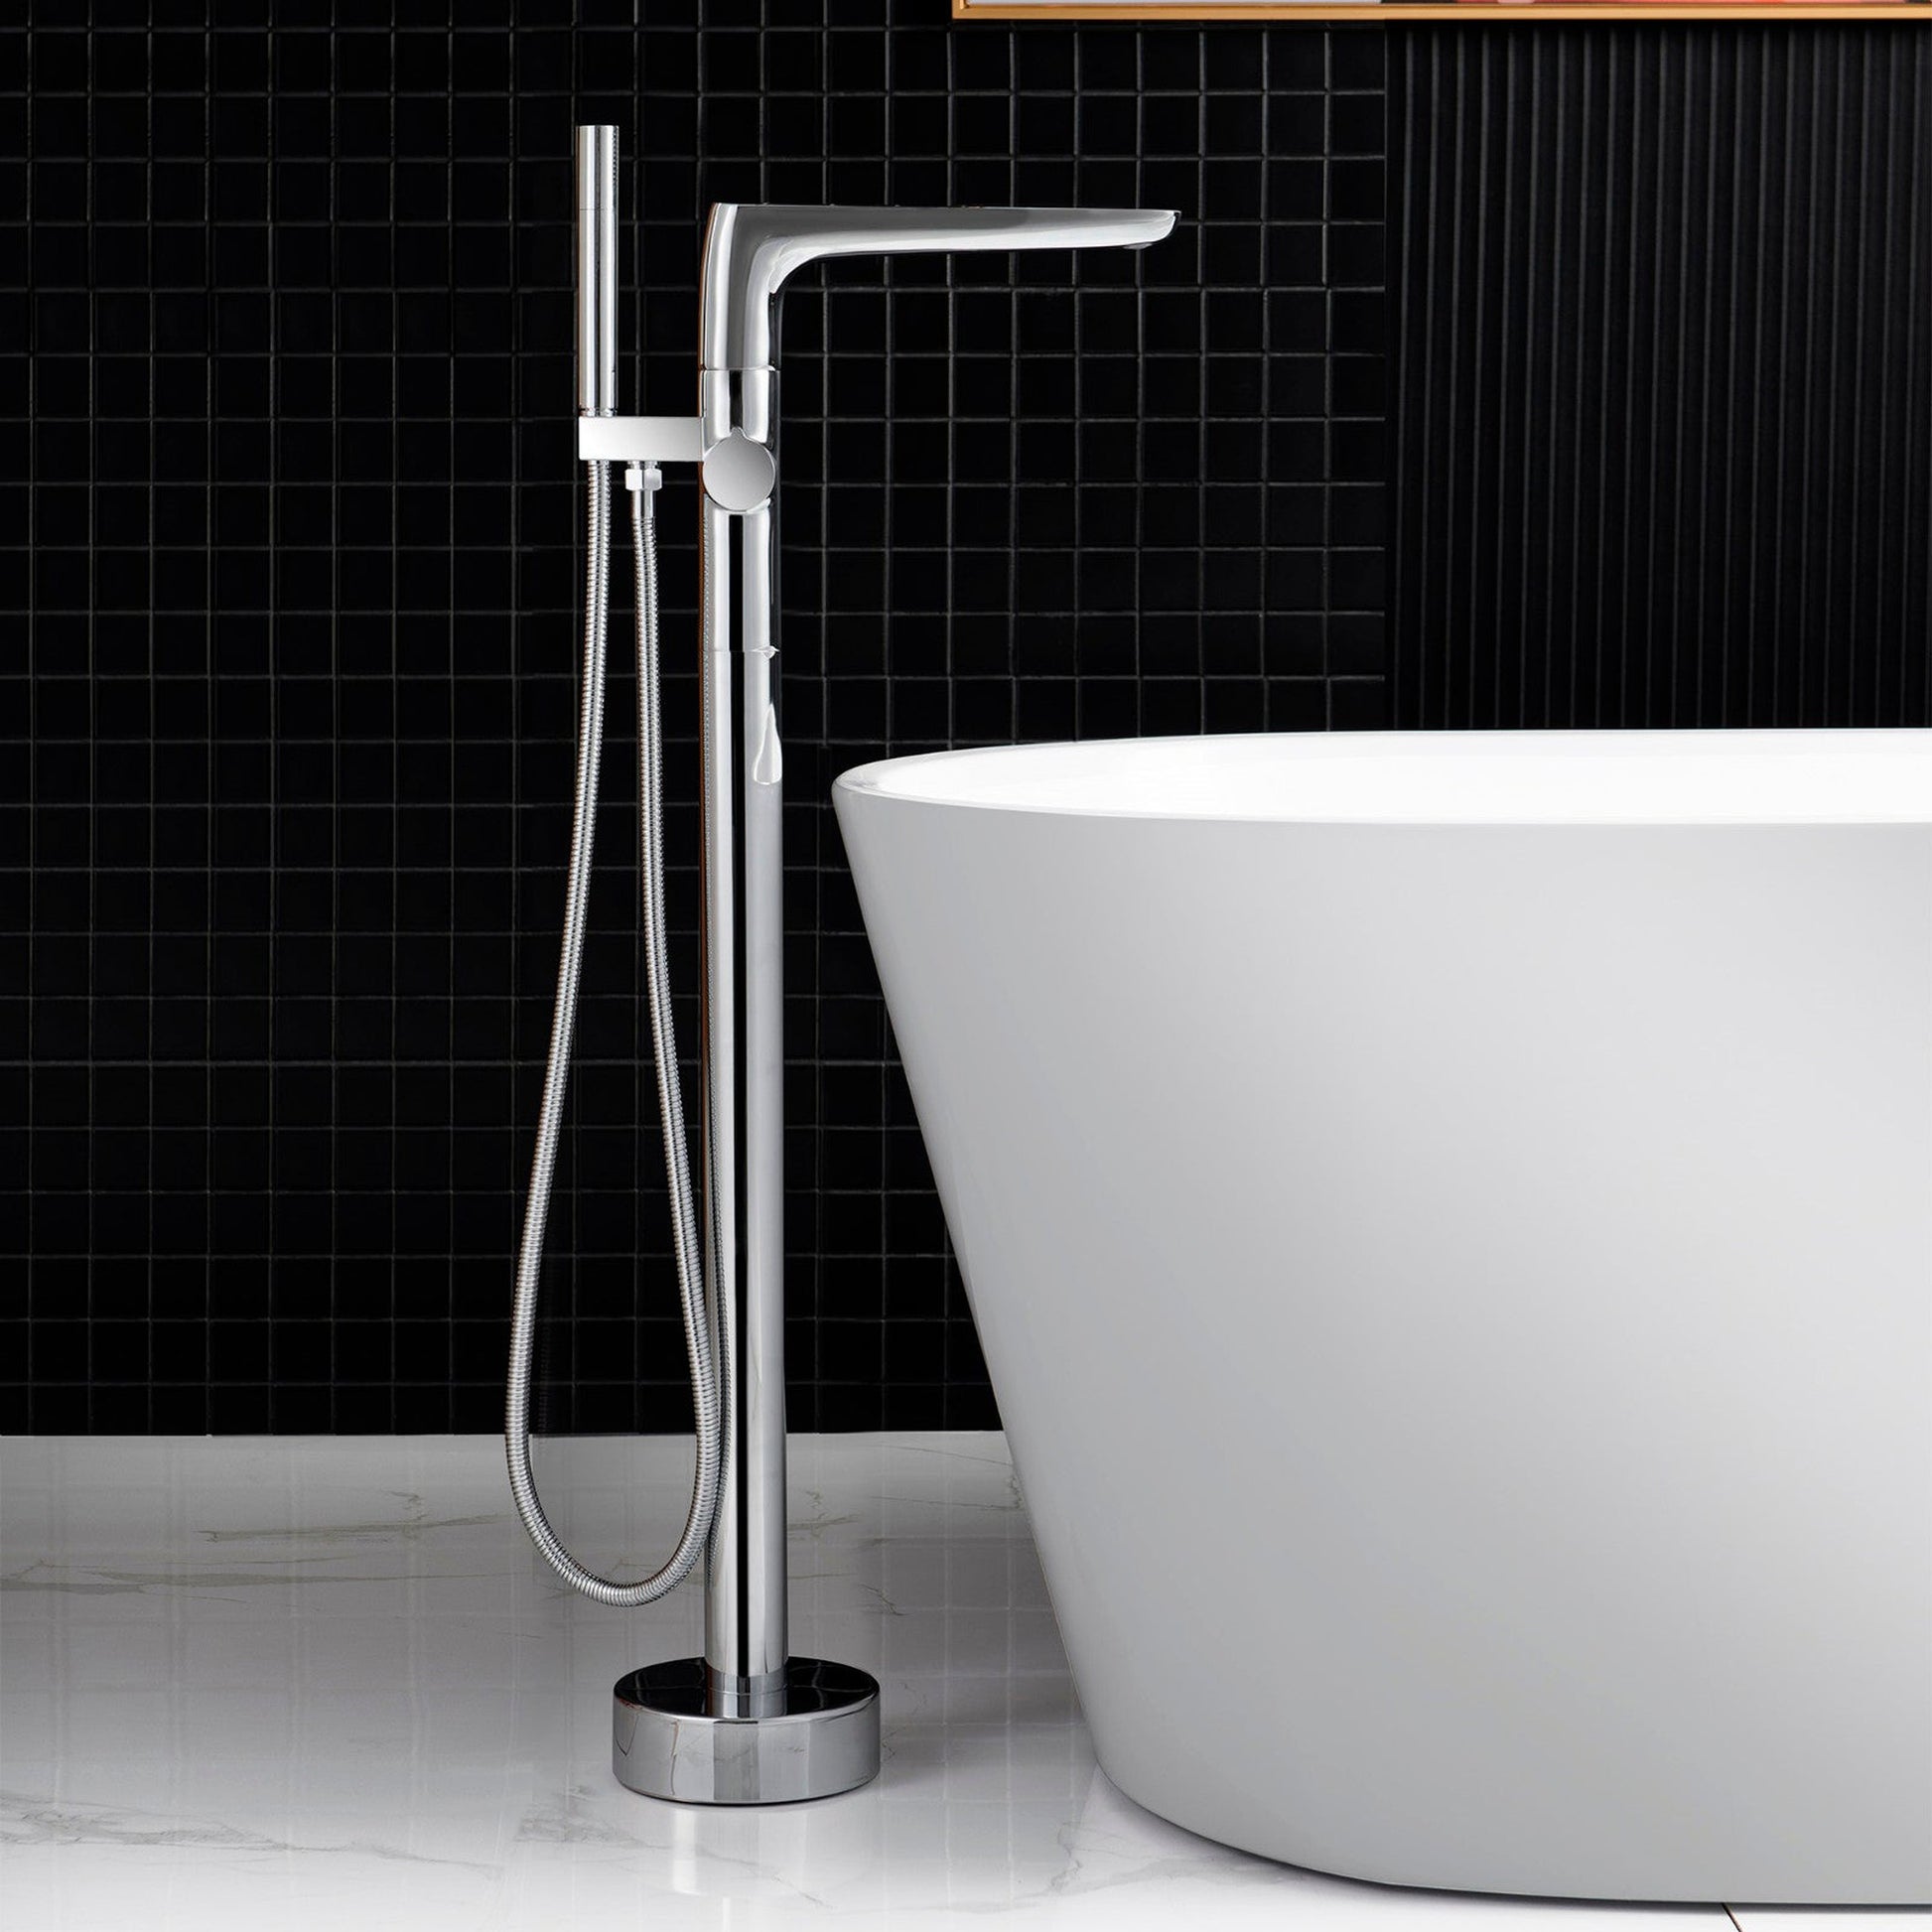 WoodBridge B0014 59" White Acrylic Freestanding Soaking Bathtub With Chrome Drain, Overflow, F-0013 Tub Filler and Caddy Tray